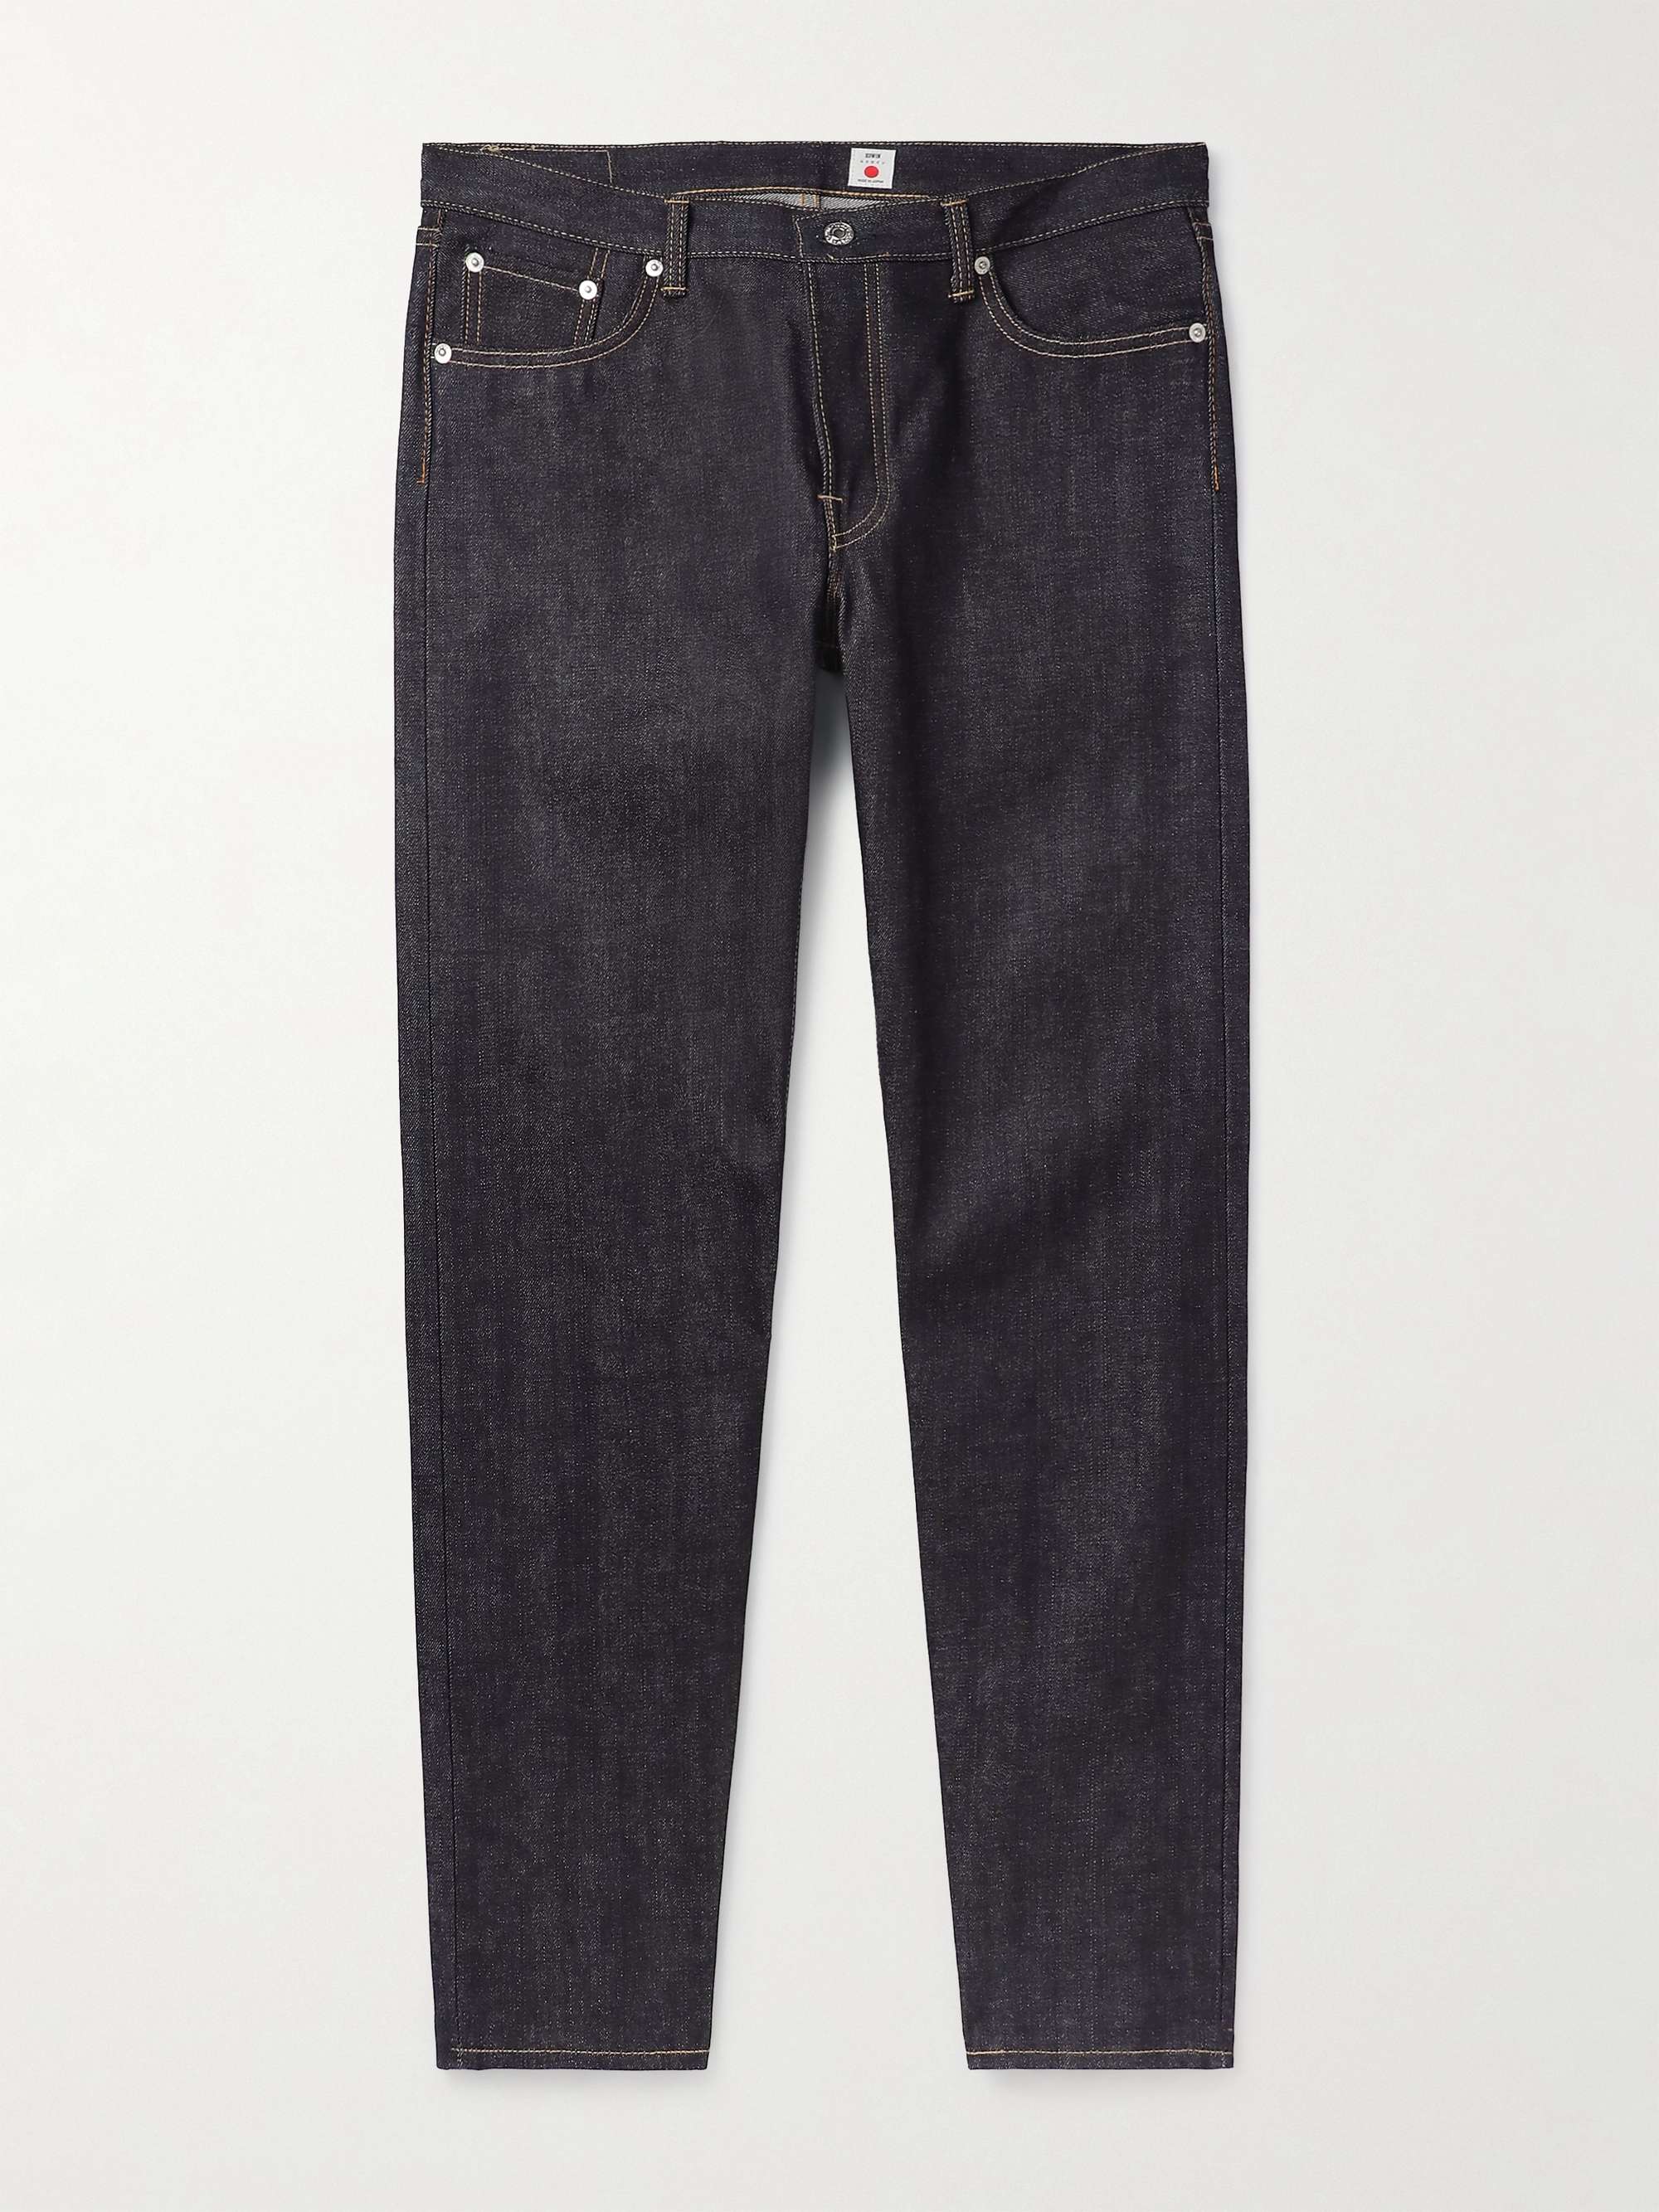 EDWIN Tapered Recycled Selvedge Jeans for Men | MR PORTER